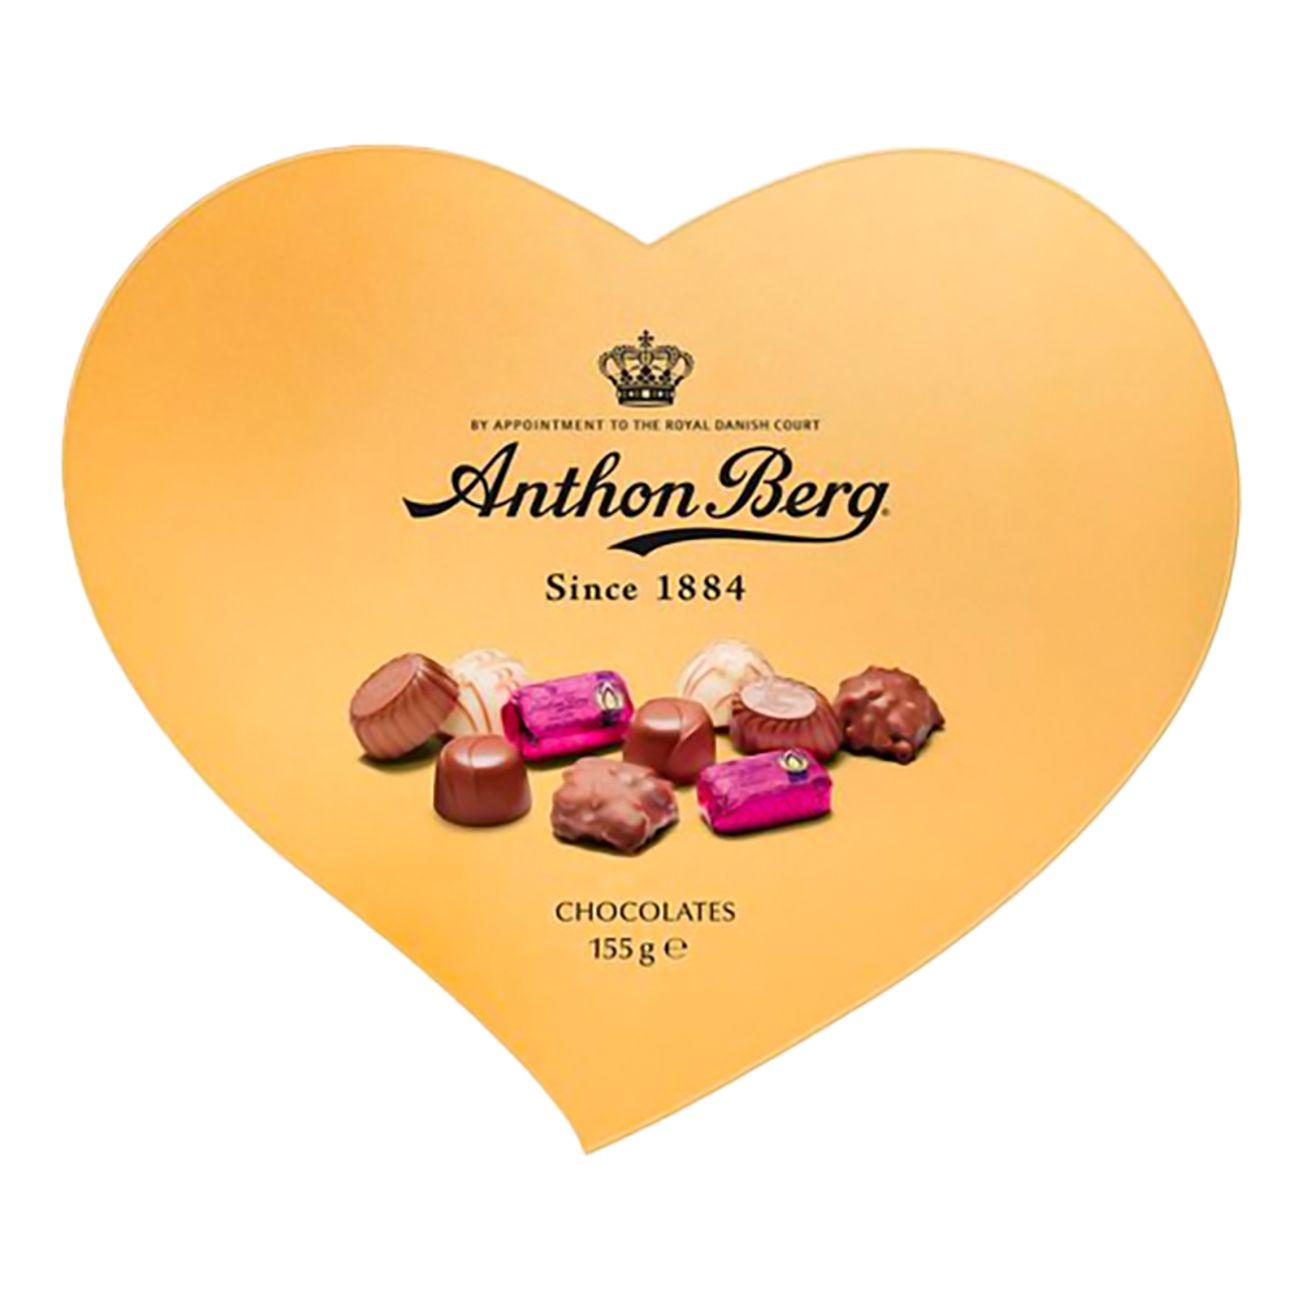 Шоколад берг. Шоколадные конфеты Anthon Berg. Ассорти шоколадных конфет Anthon Berg, Heart Shaped Gold Box, 155 г. Конфеты Anthon Berg сердце. Датские конфеты Anthon Berg.